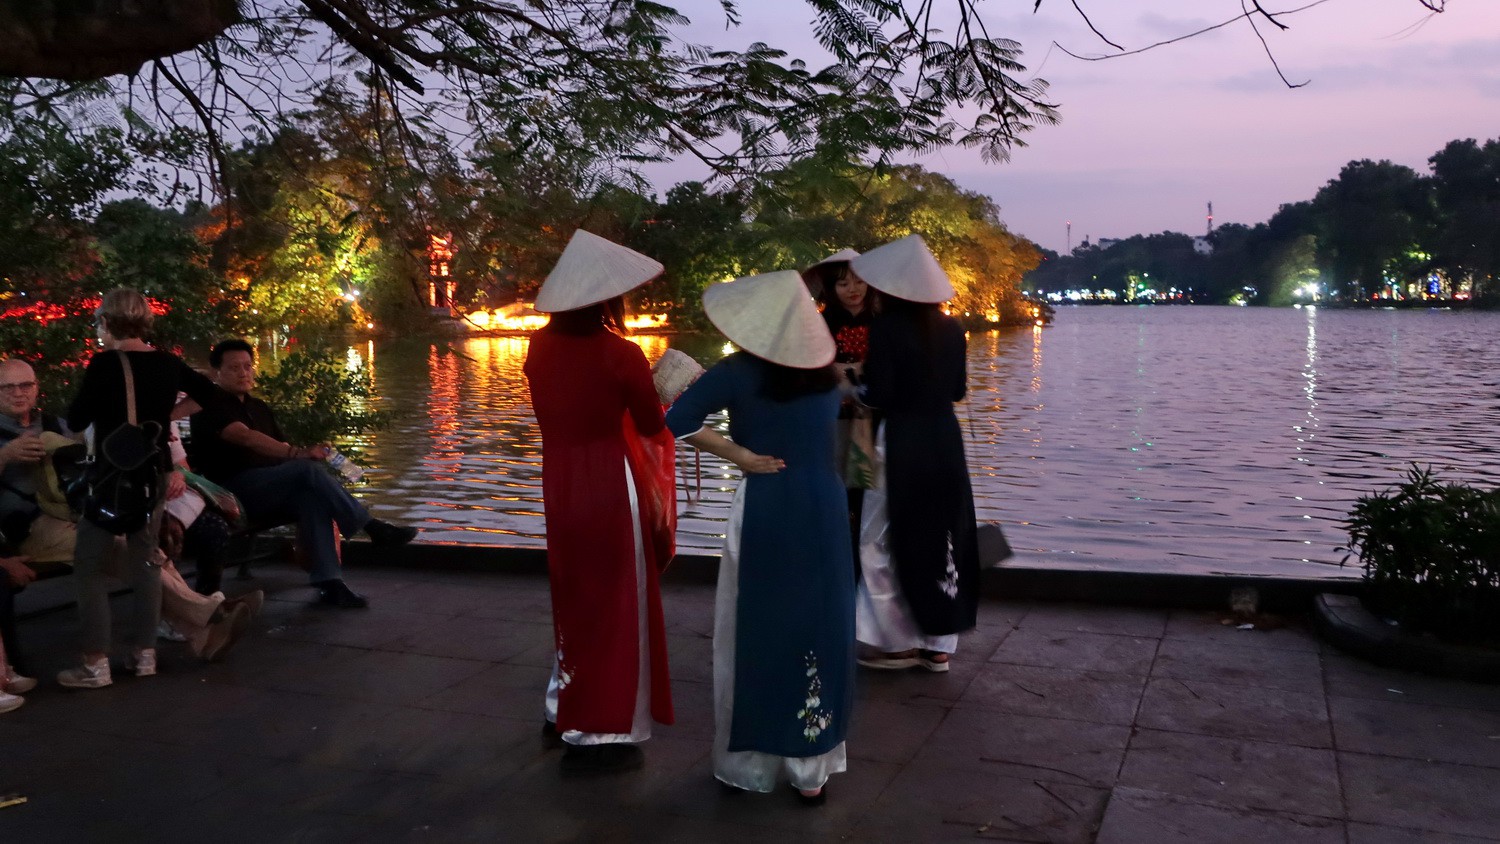 Dawn at Hoàn Kiem Lake in the center of Hanoi